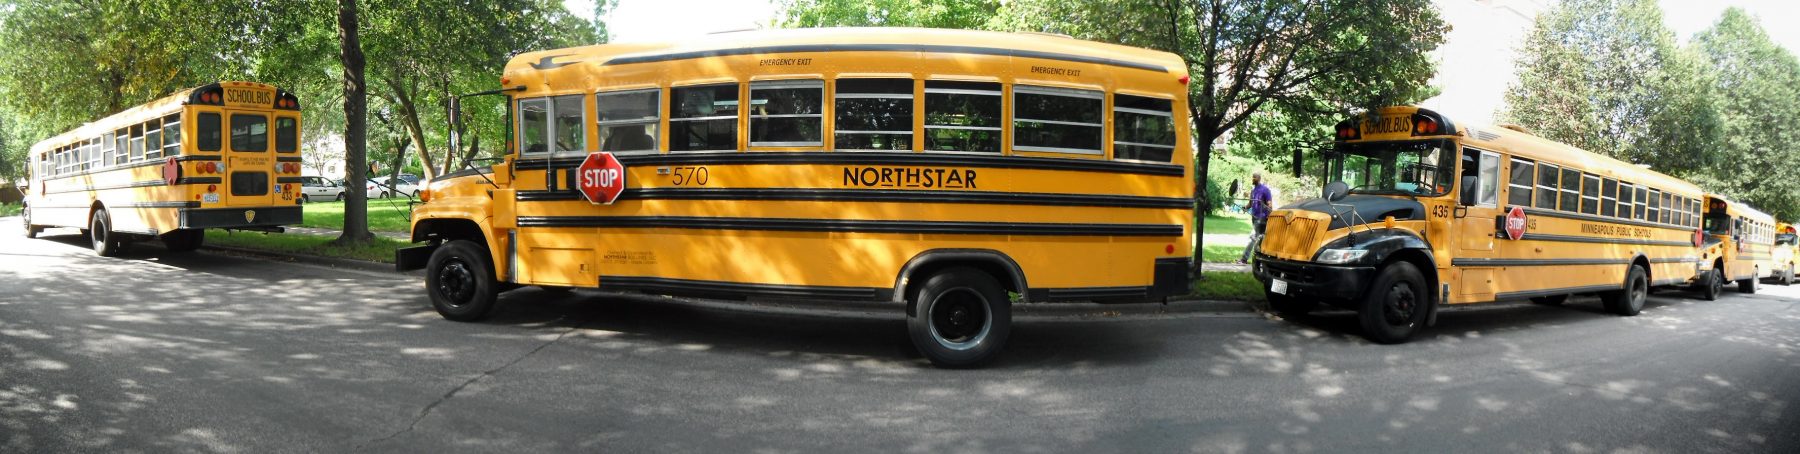 schoolbuses_stanford_middle_school_first_week_of_school_mpls_mn_01